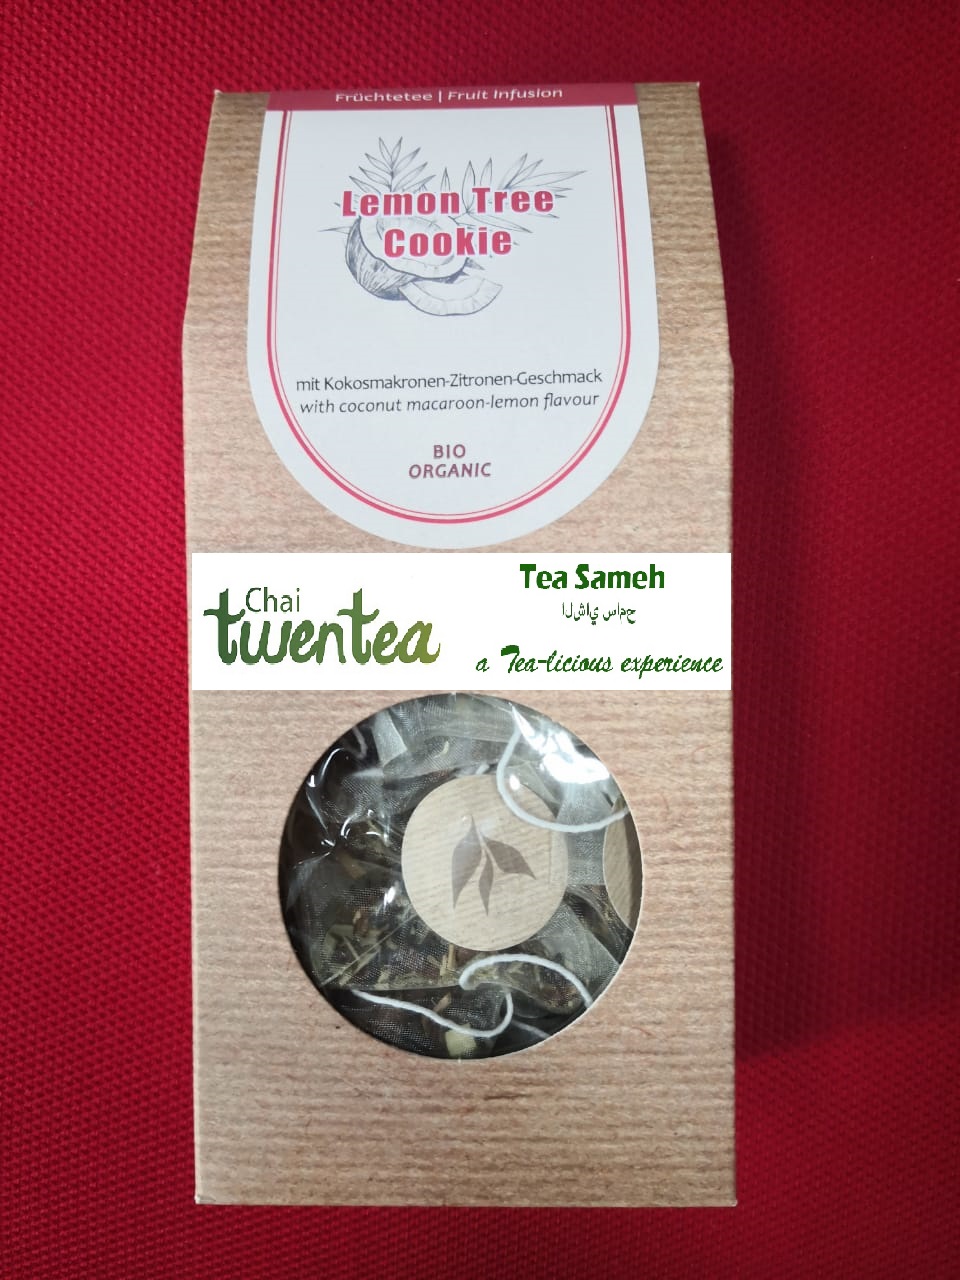 LEMON TREE COOKIE - Chaitwentea a Tealicious beverage